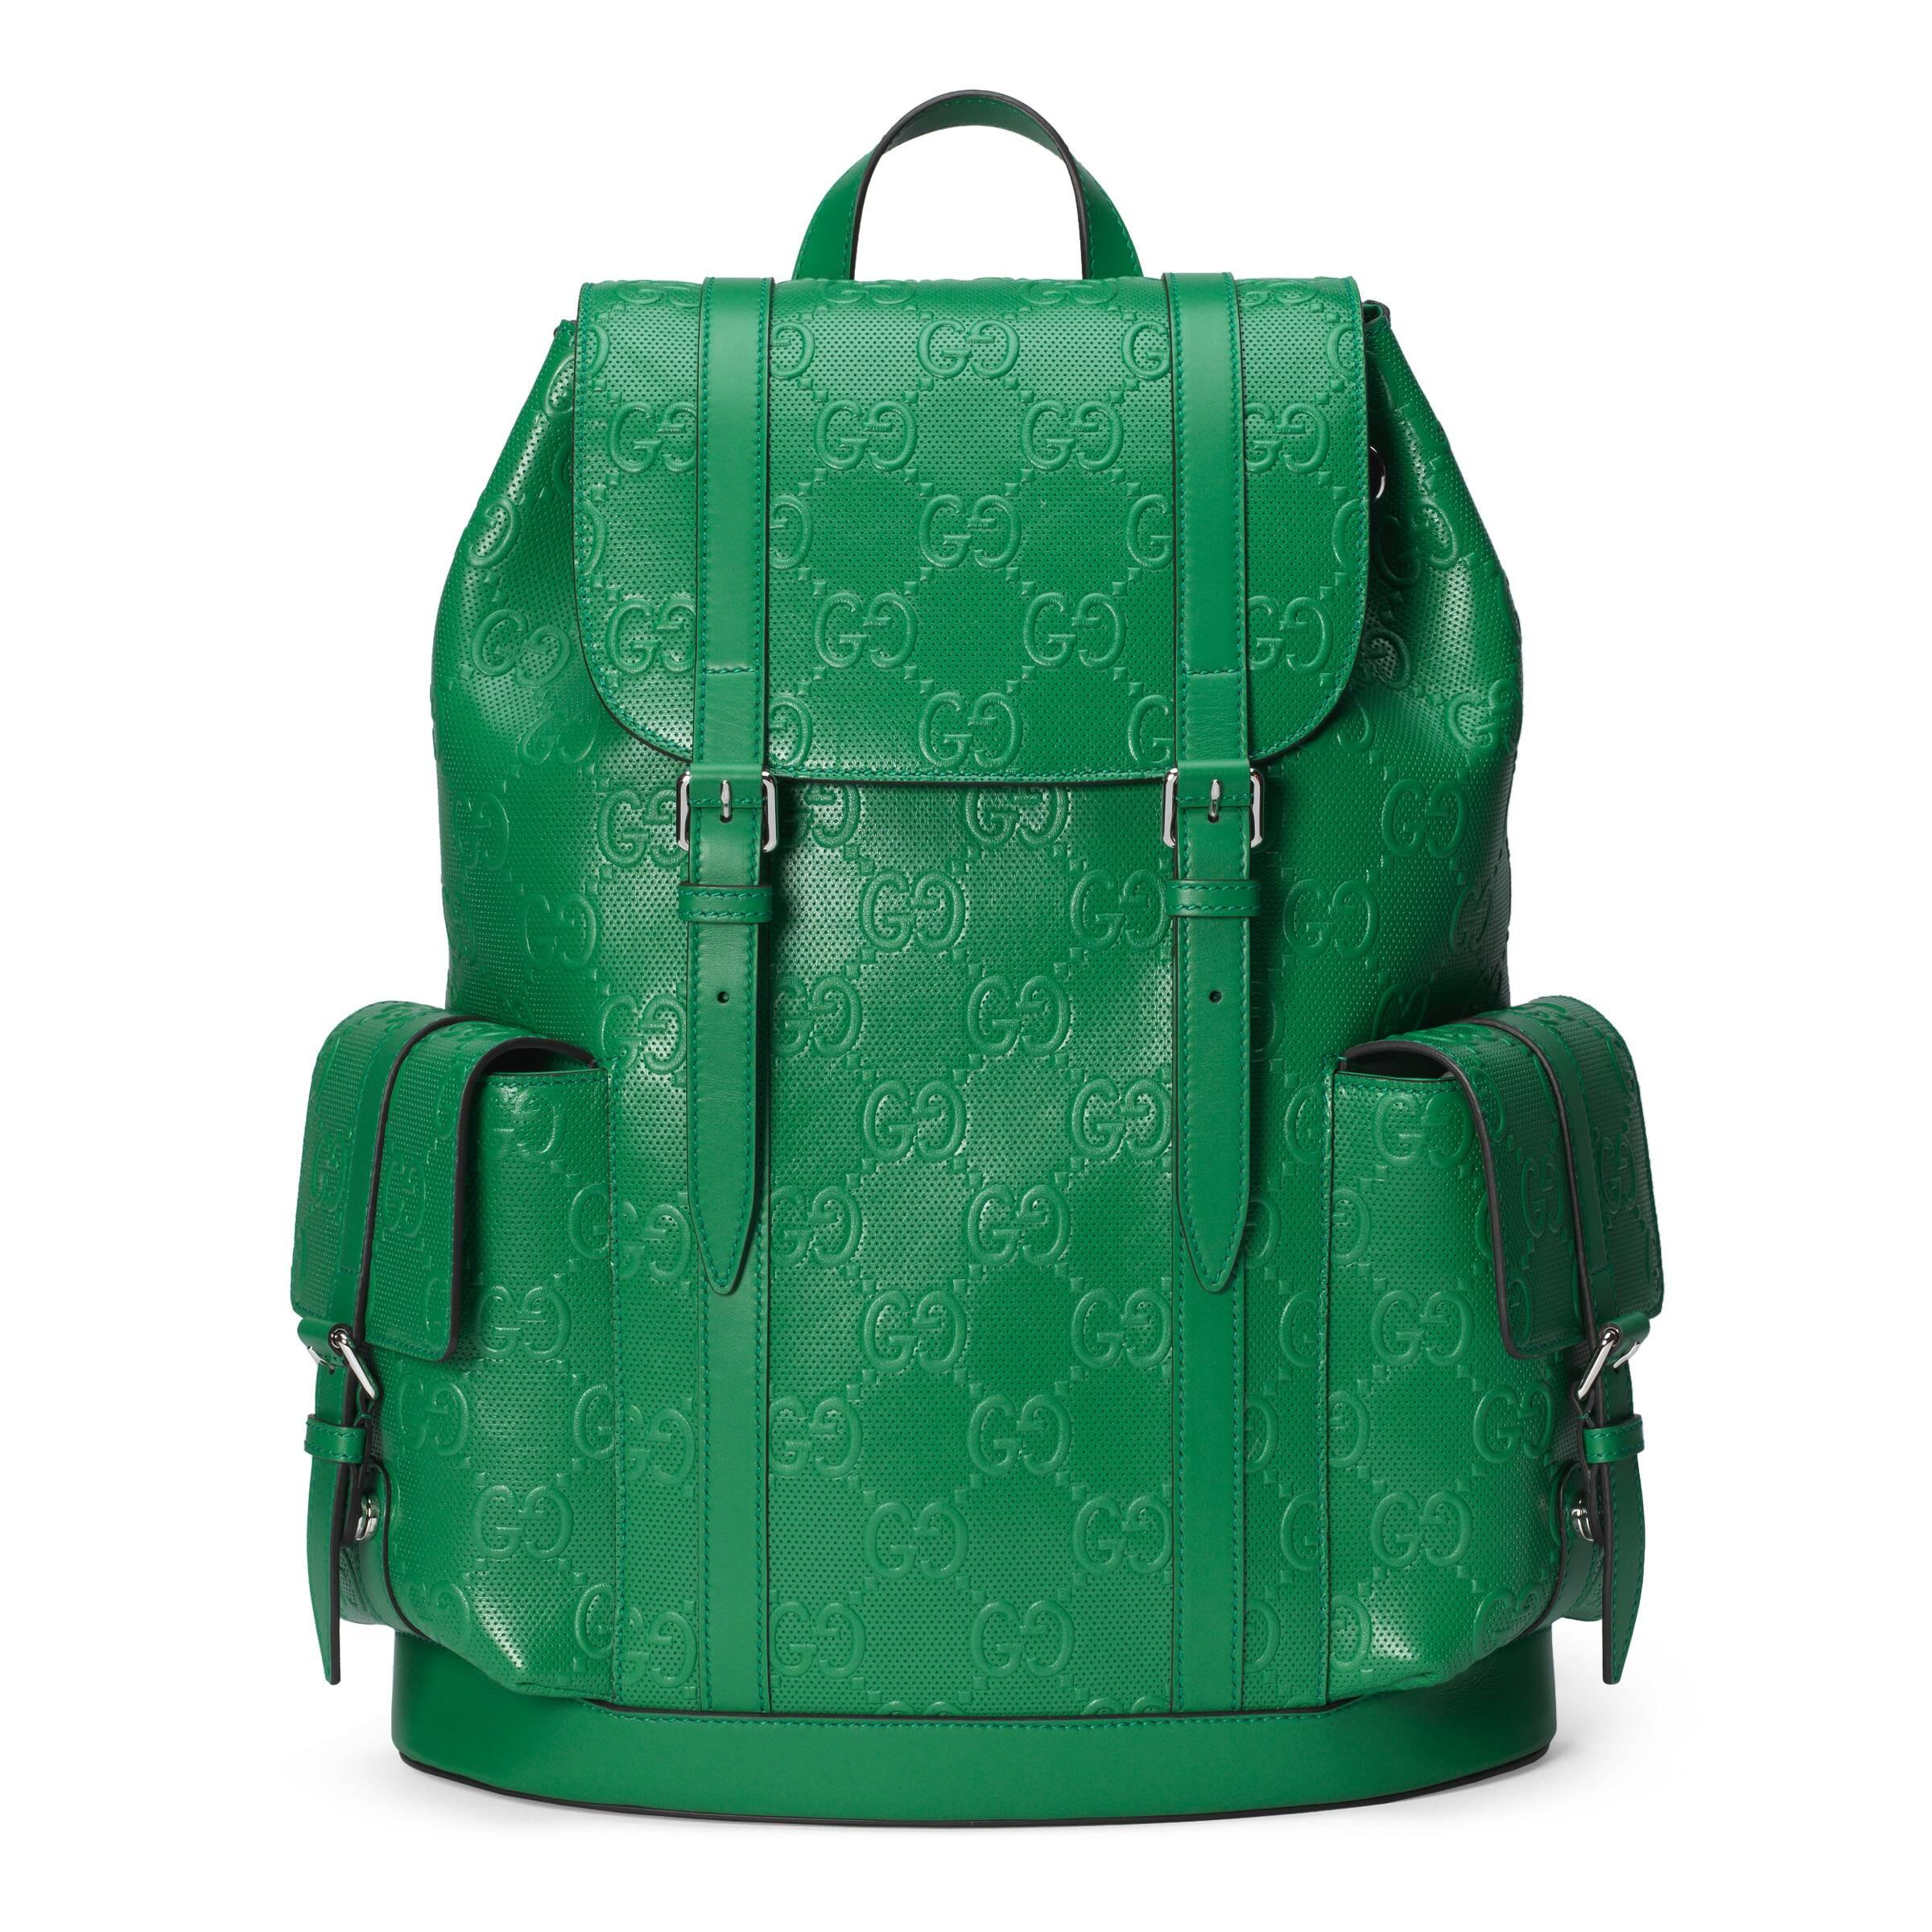 Arriba 54+ imagen gucci green backpack